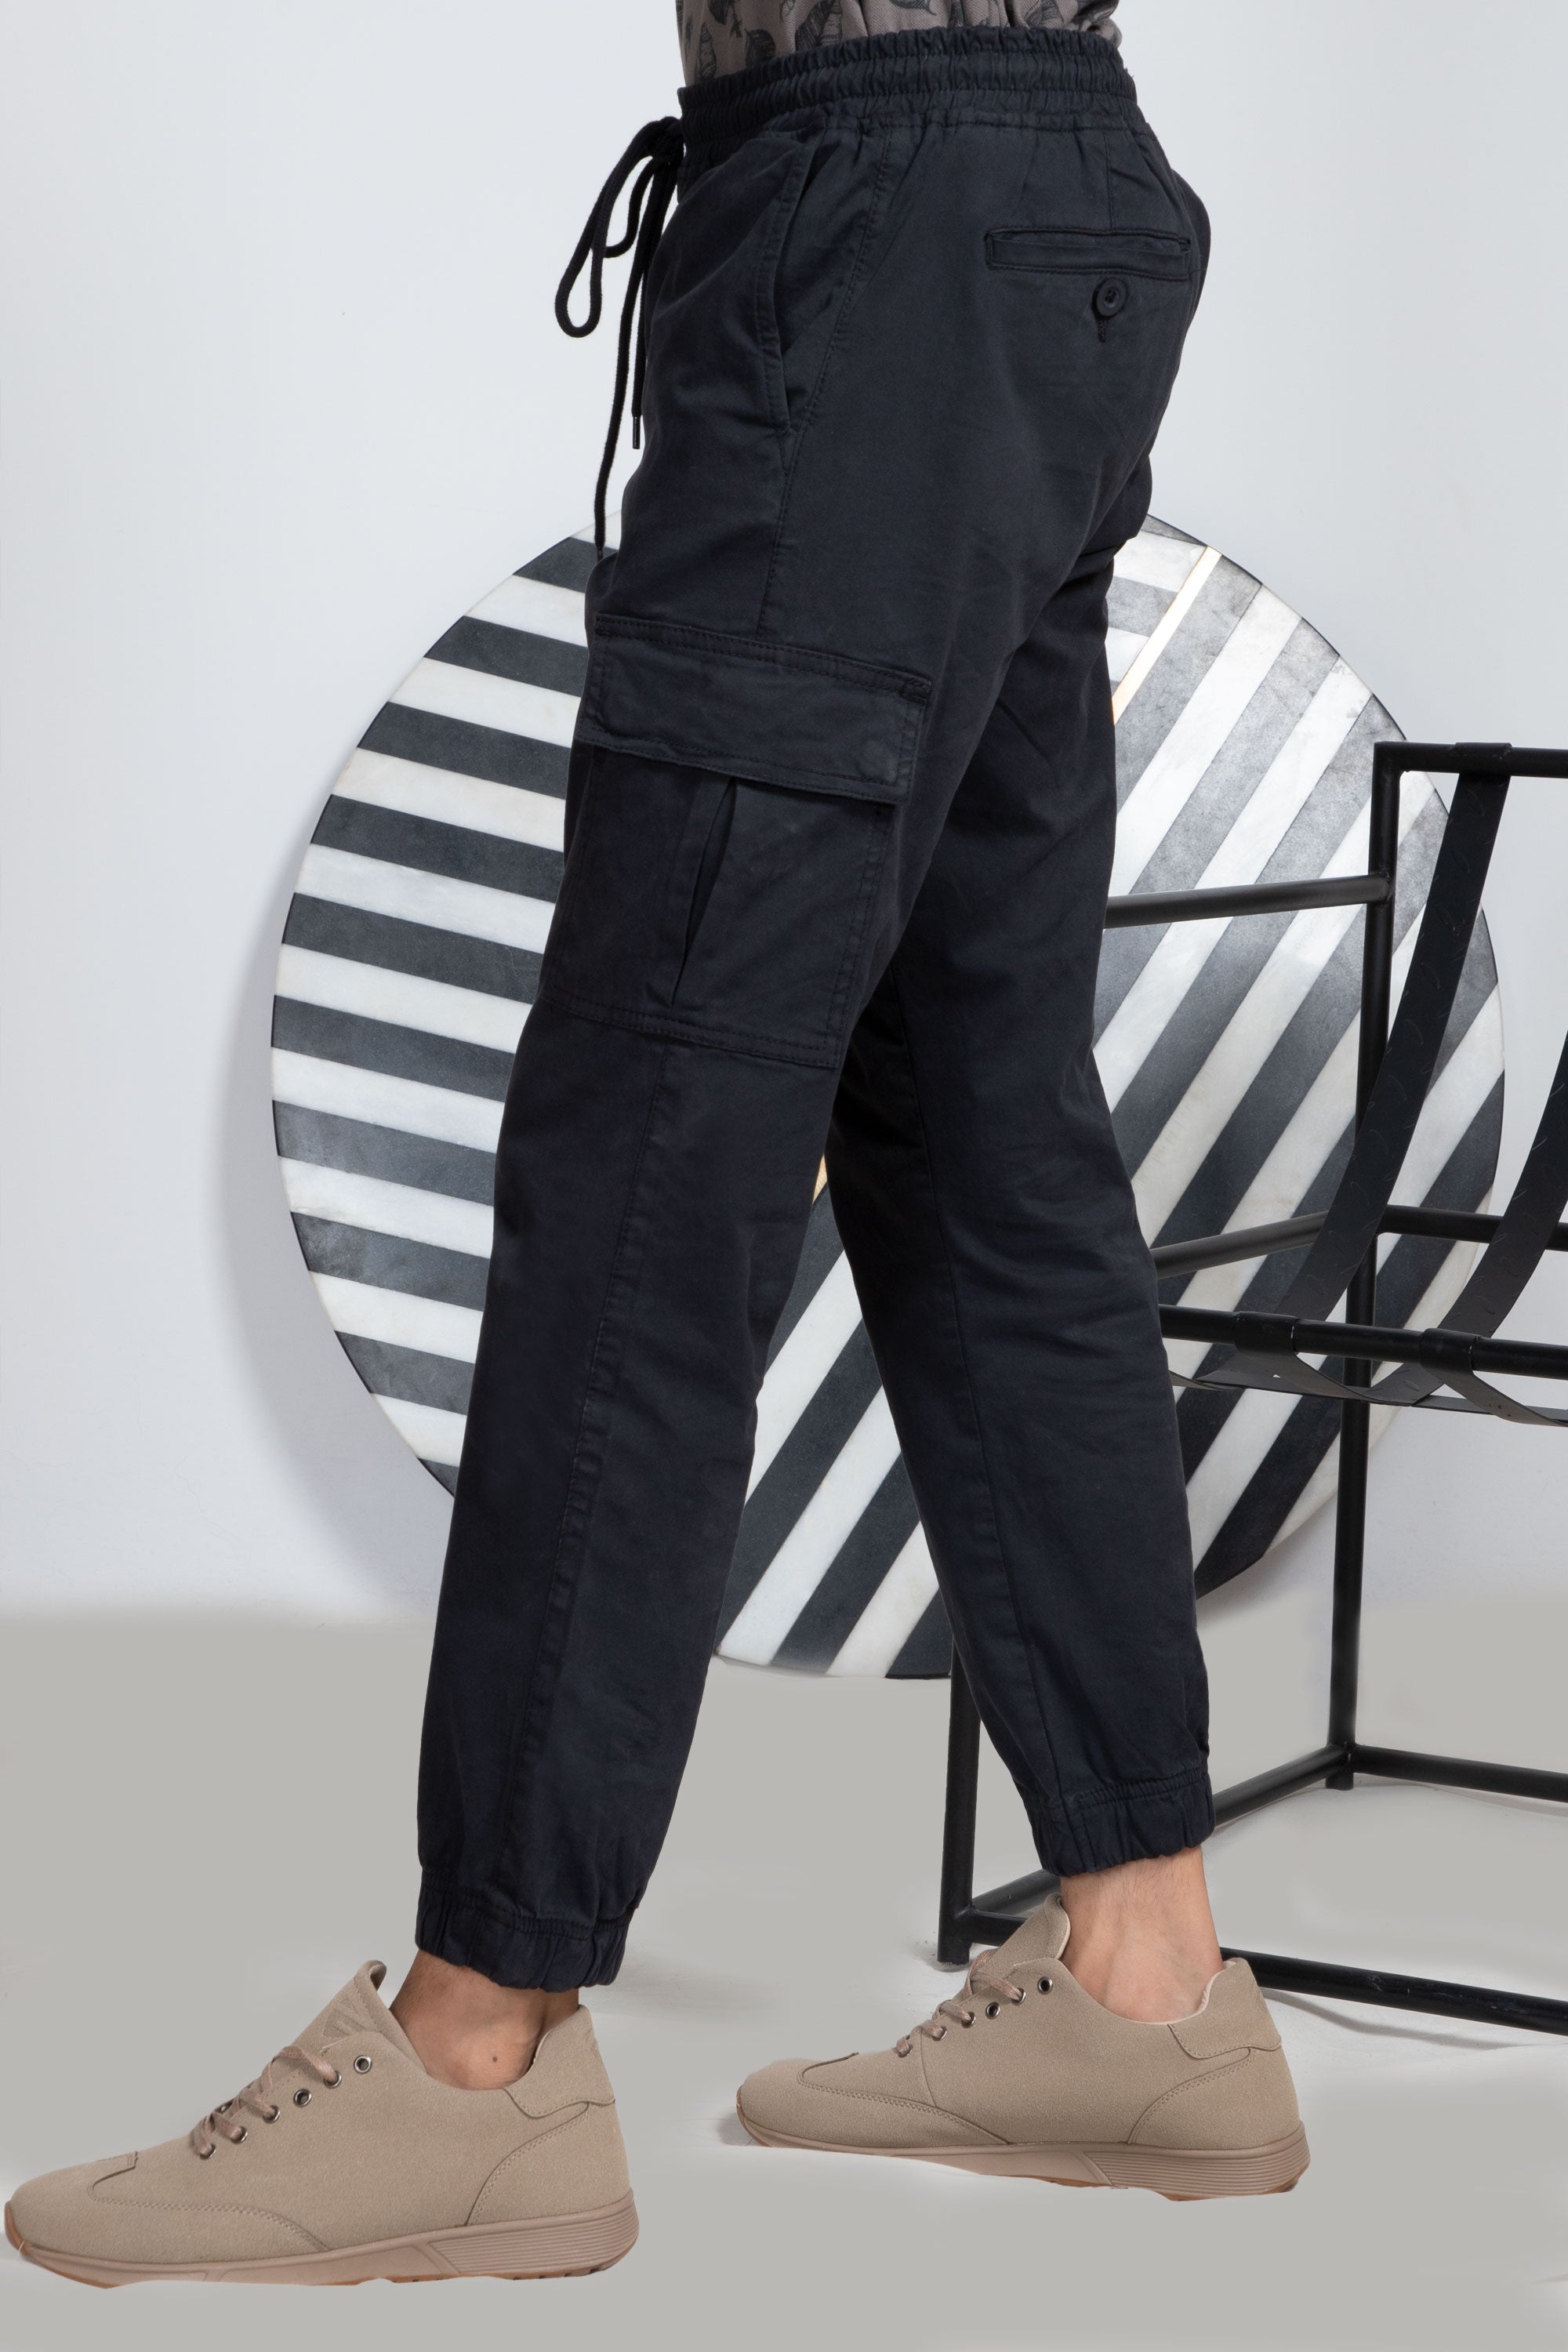 Buy Clubbuzz Men's Black Cargo Pant | Casual Multi Pockets Straight Slacks  Long Trousers for Men -36 at Amazon.in